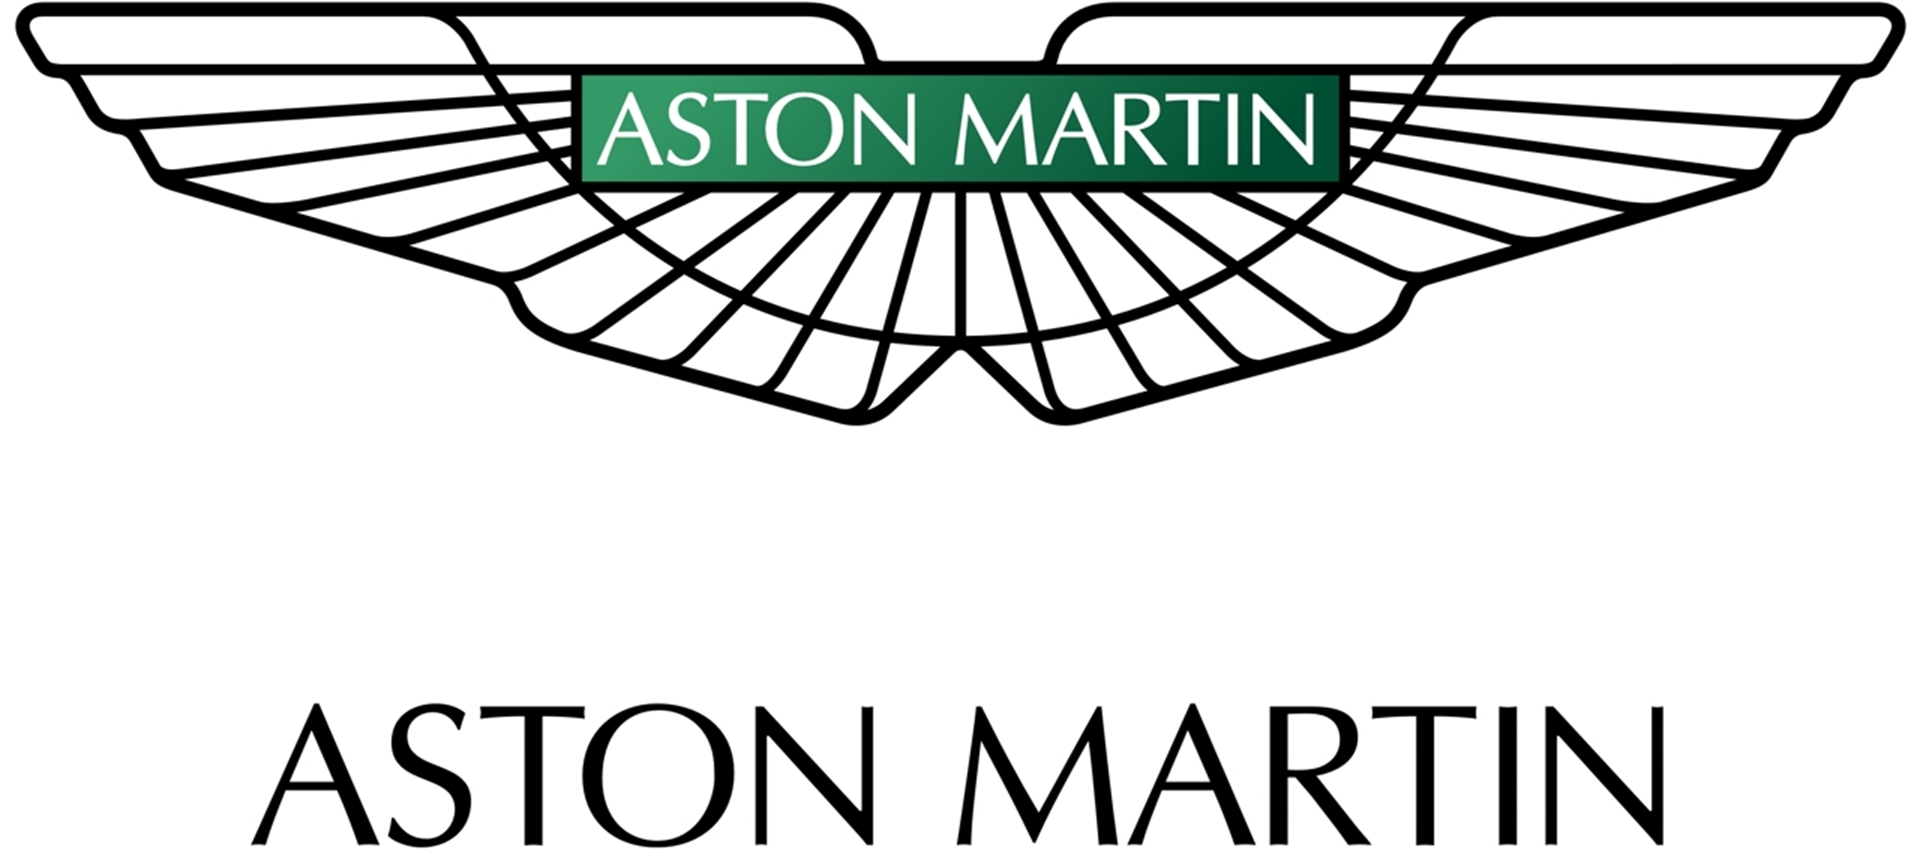 ASTON MARTIN WORKS PRESENTS AN EVENING WITH ASTON MARTIN RACING